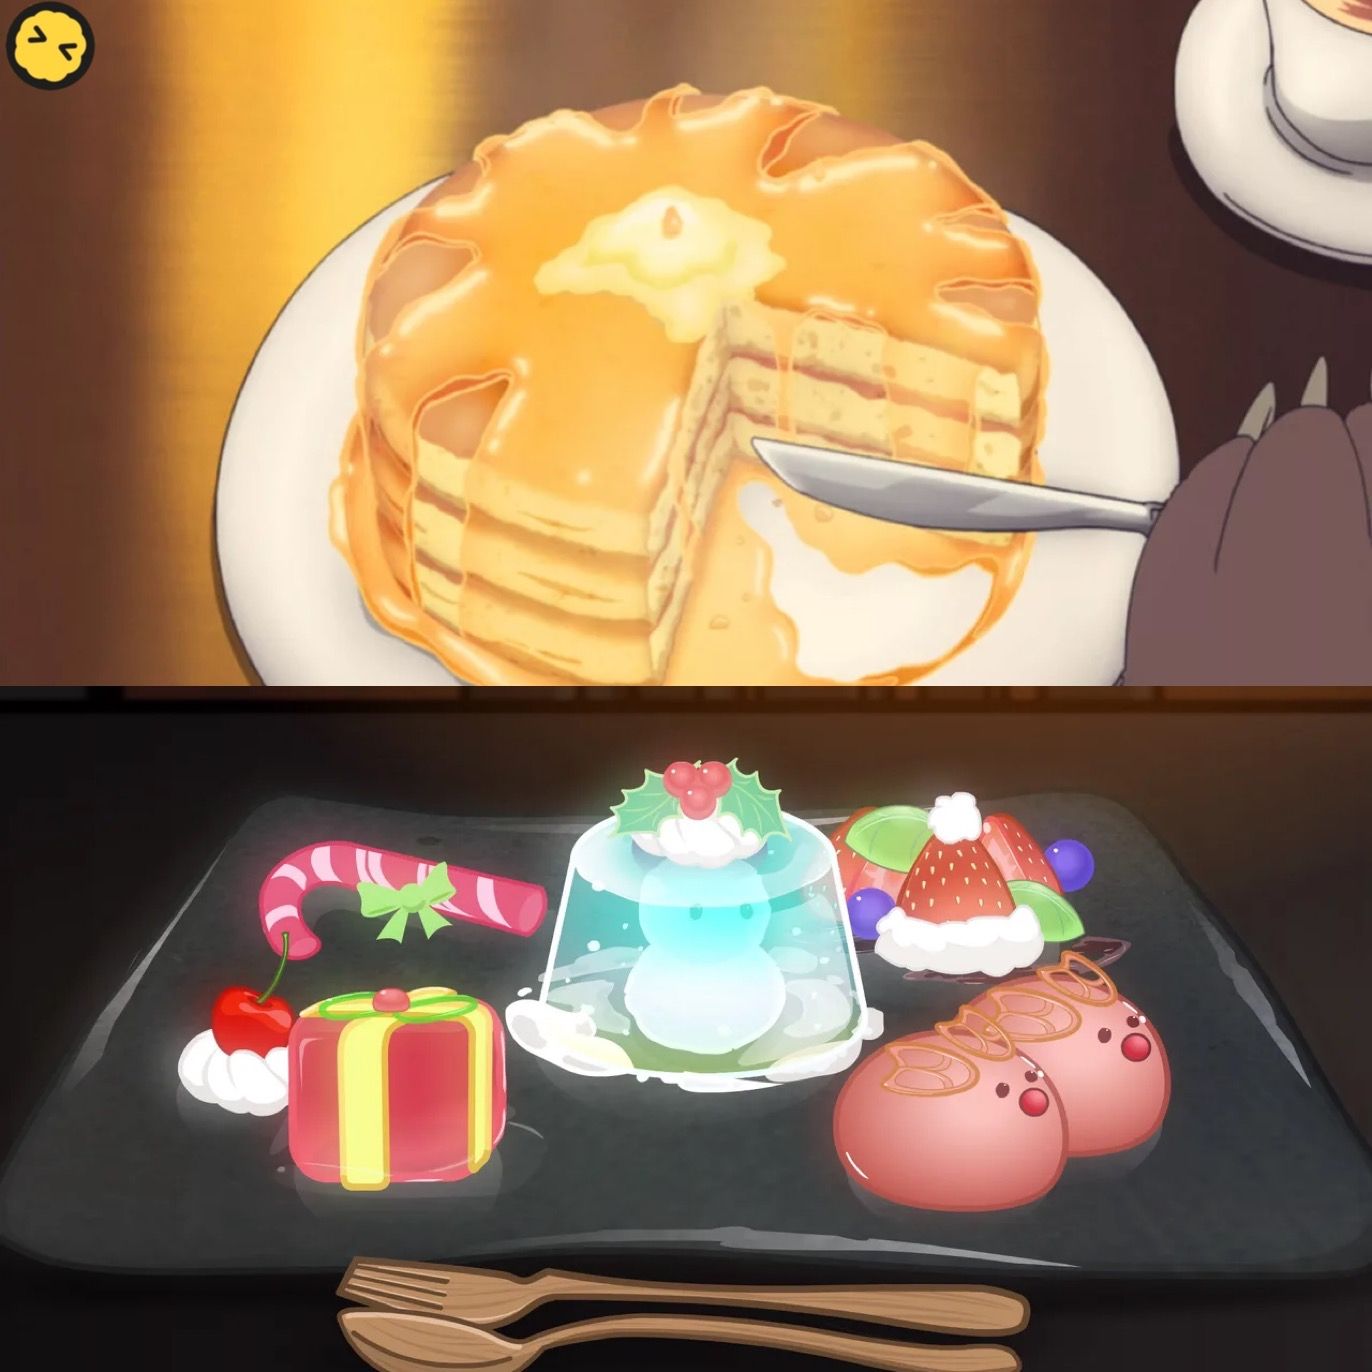 Anime sweets and pancakes  nomnom  rghibli